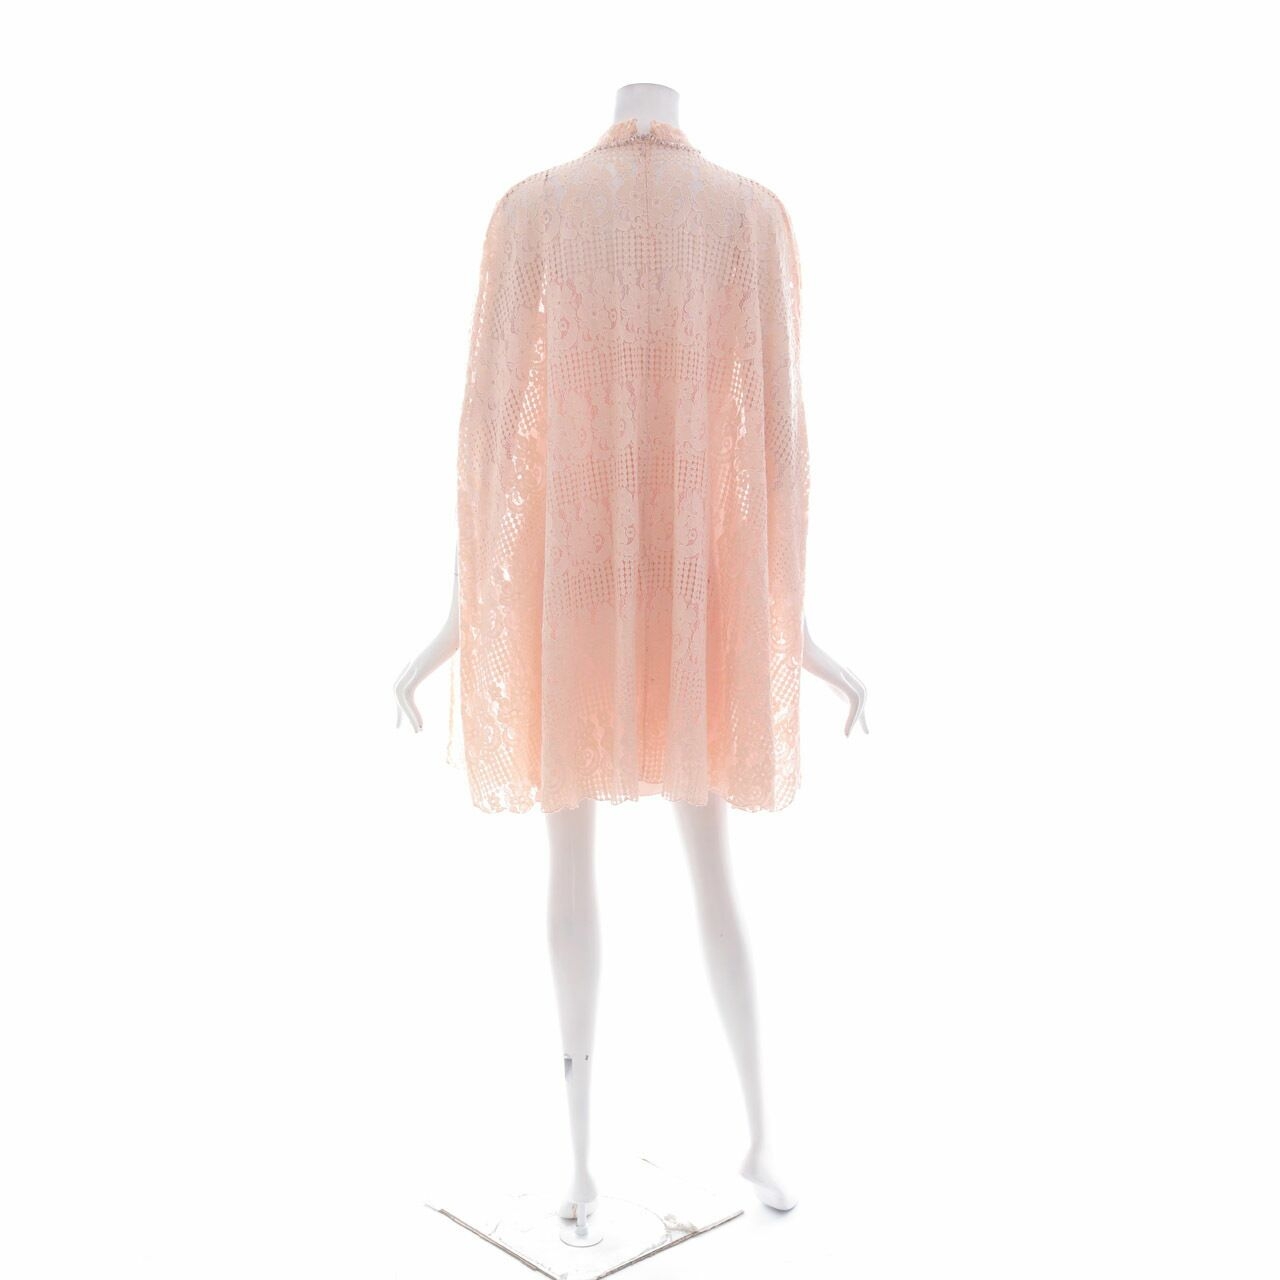 Studio 133 Biyan Pink Lace Embellished Neck Mini Dress